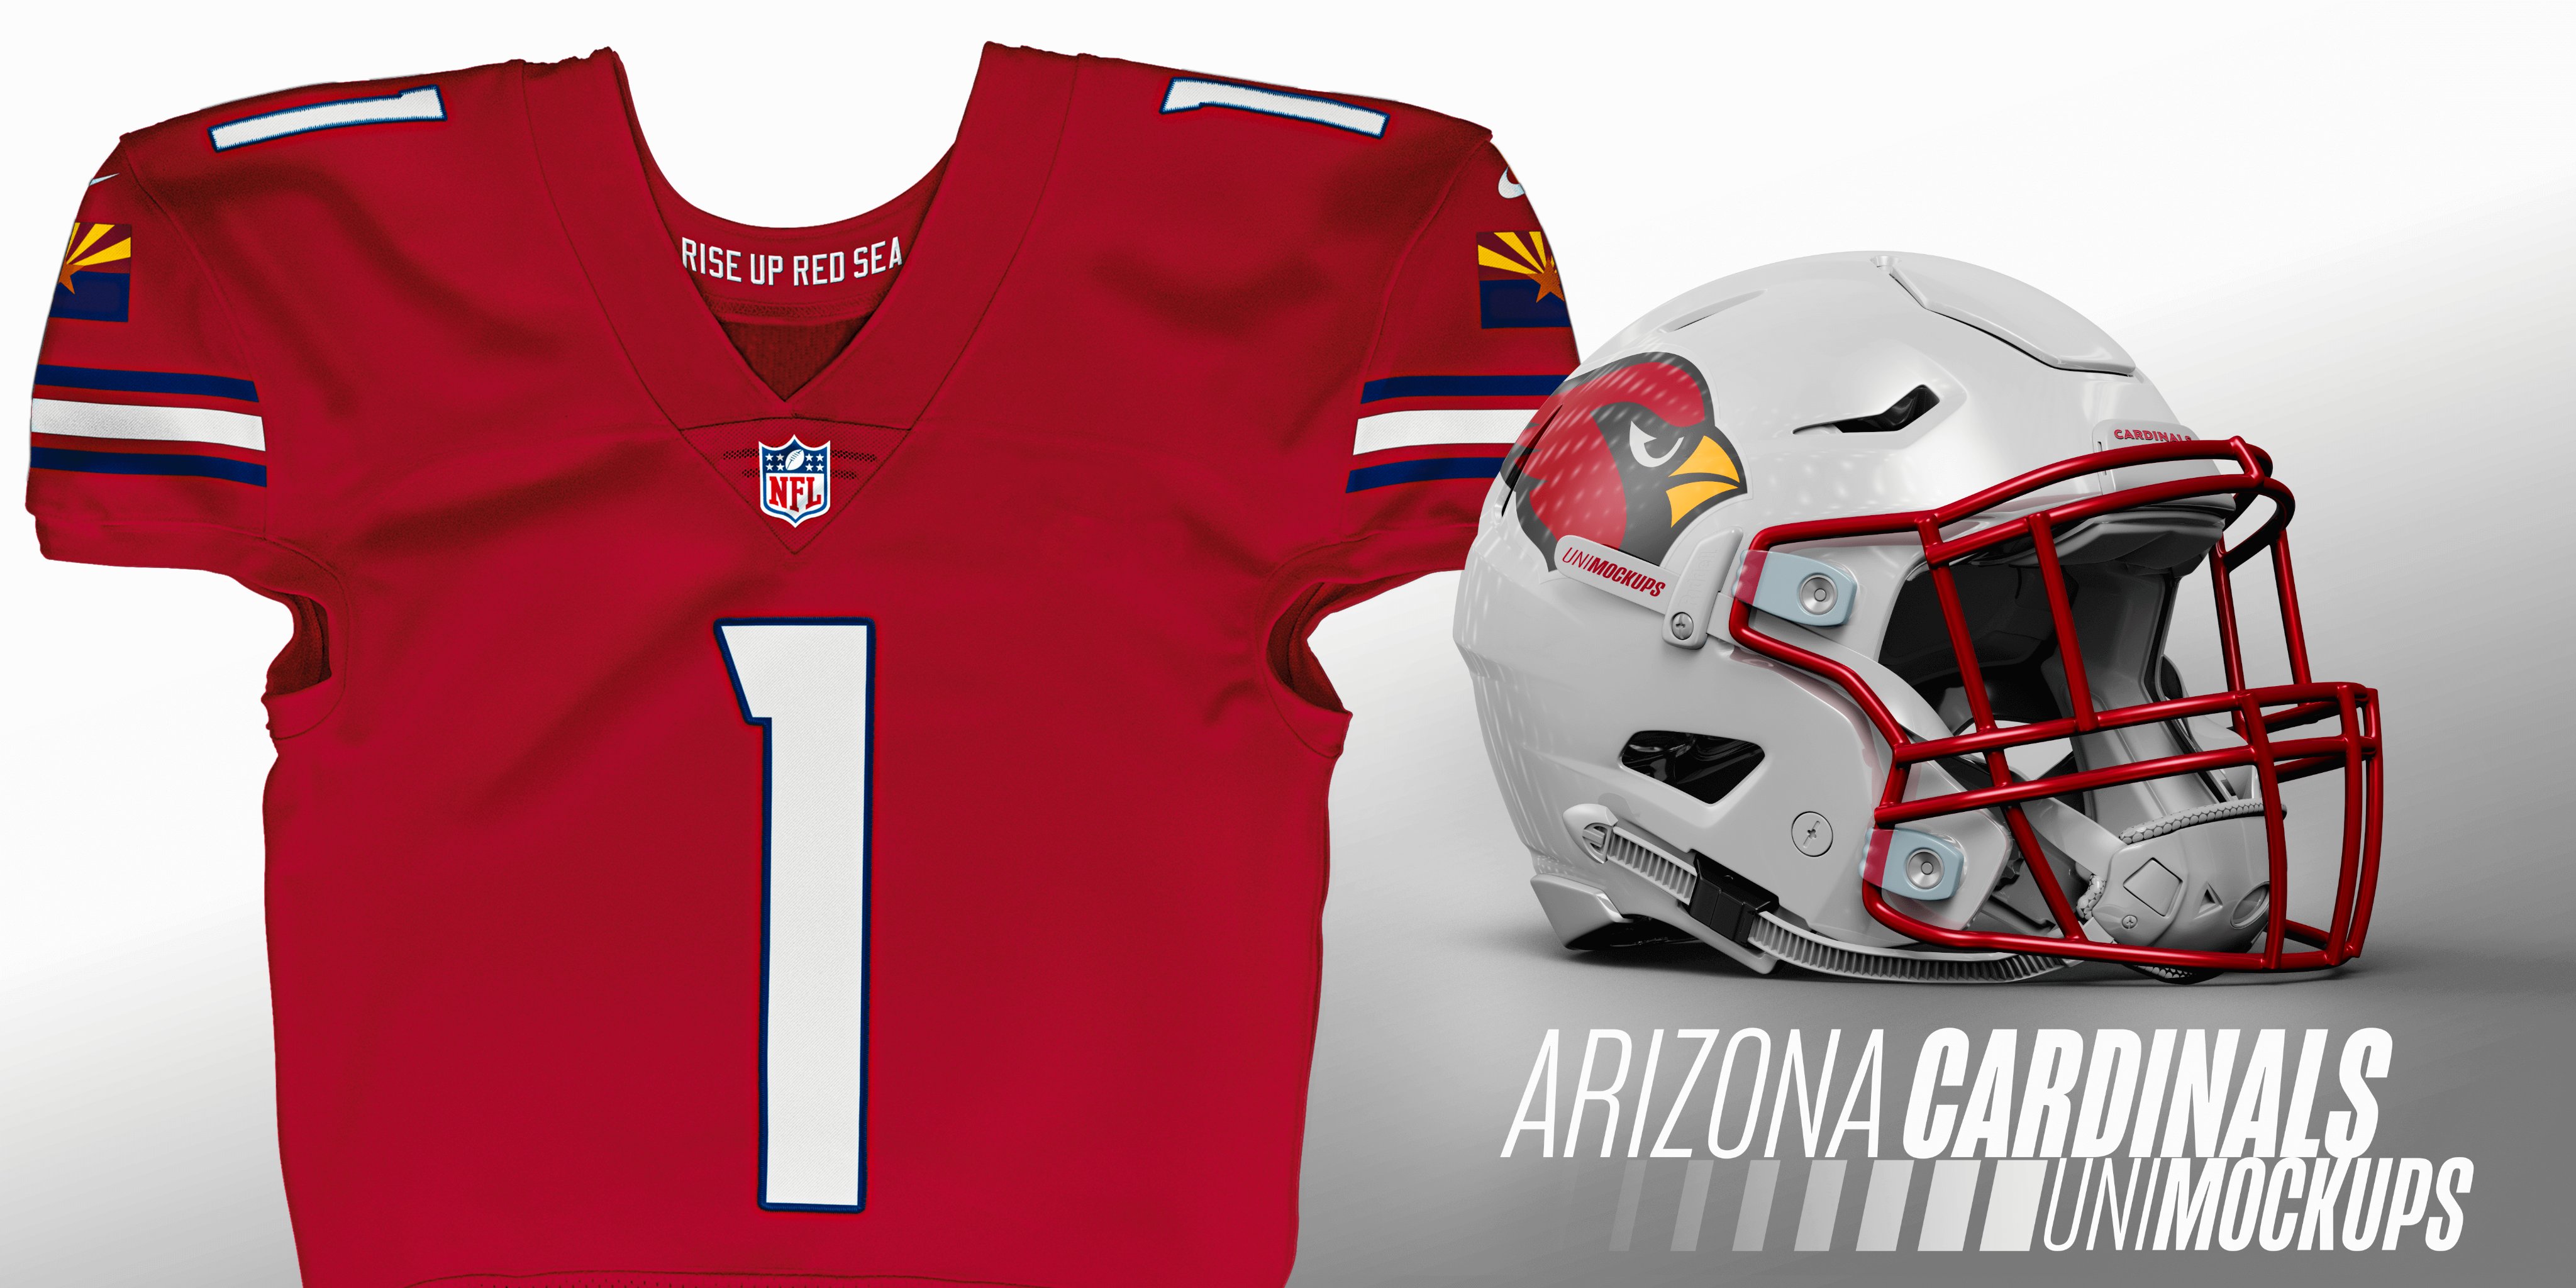 new arizona cardinals uniforms